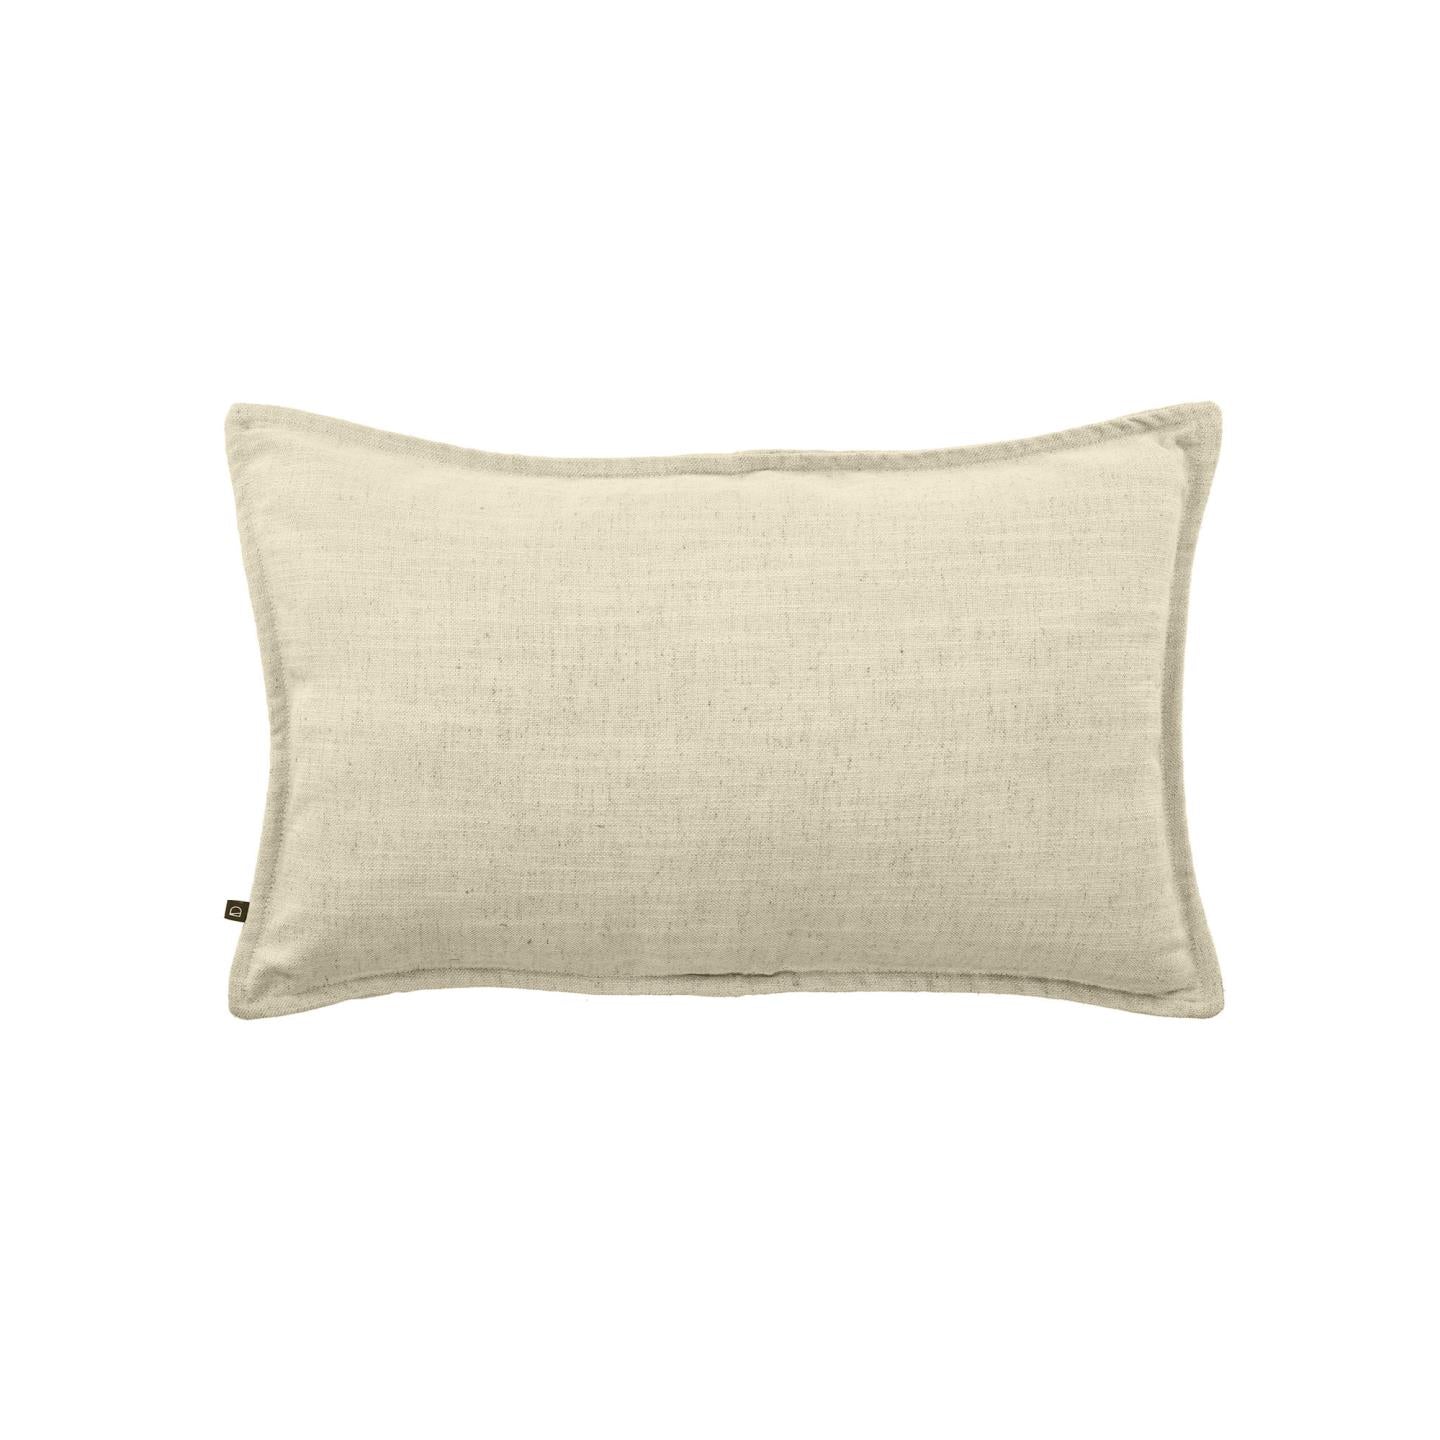 Blok cushion cover in white linen, 30 x 50 cm